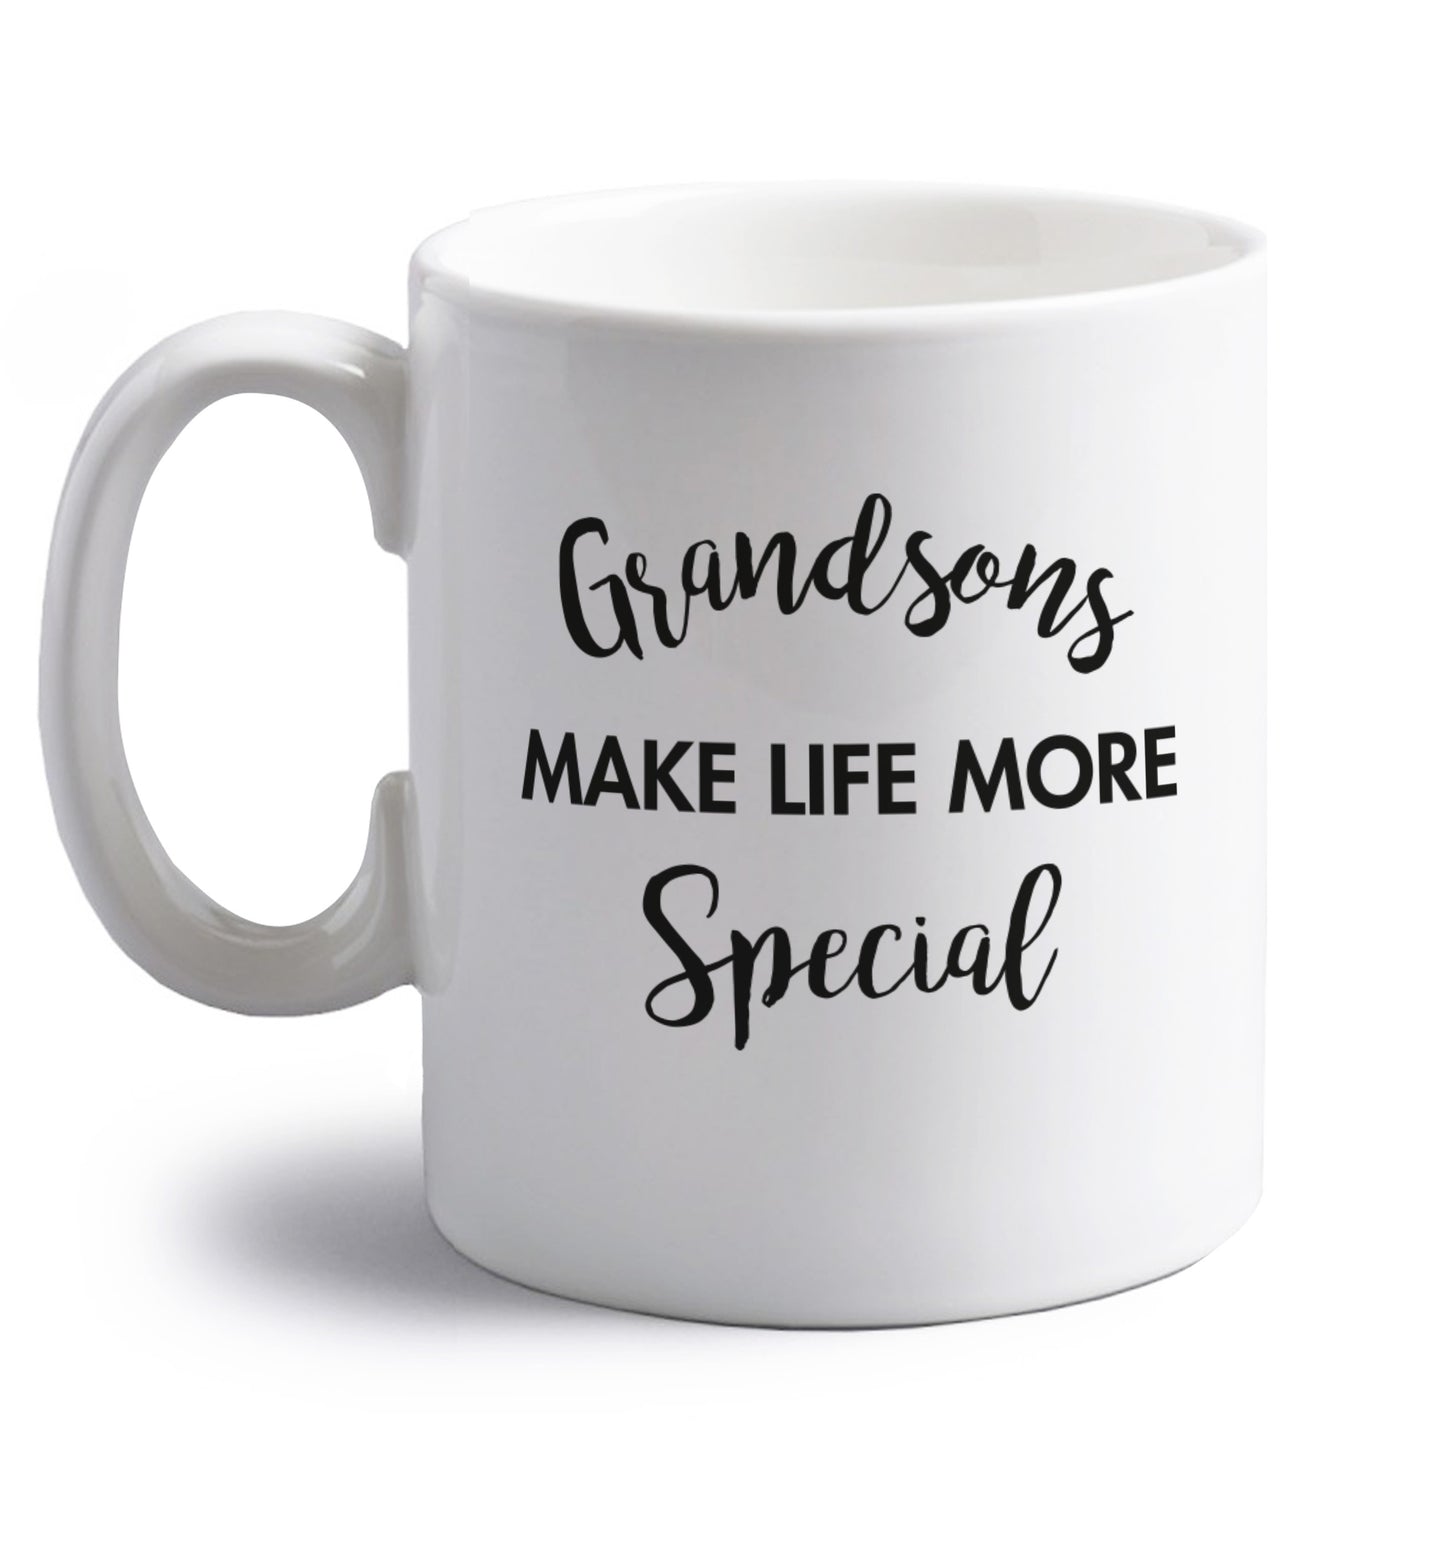 Grandsons make life more special right handed white ceramic mug 